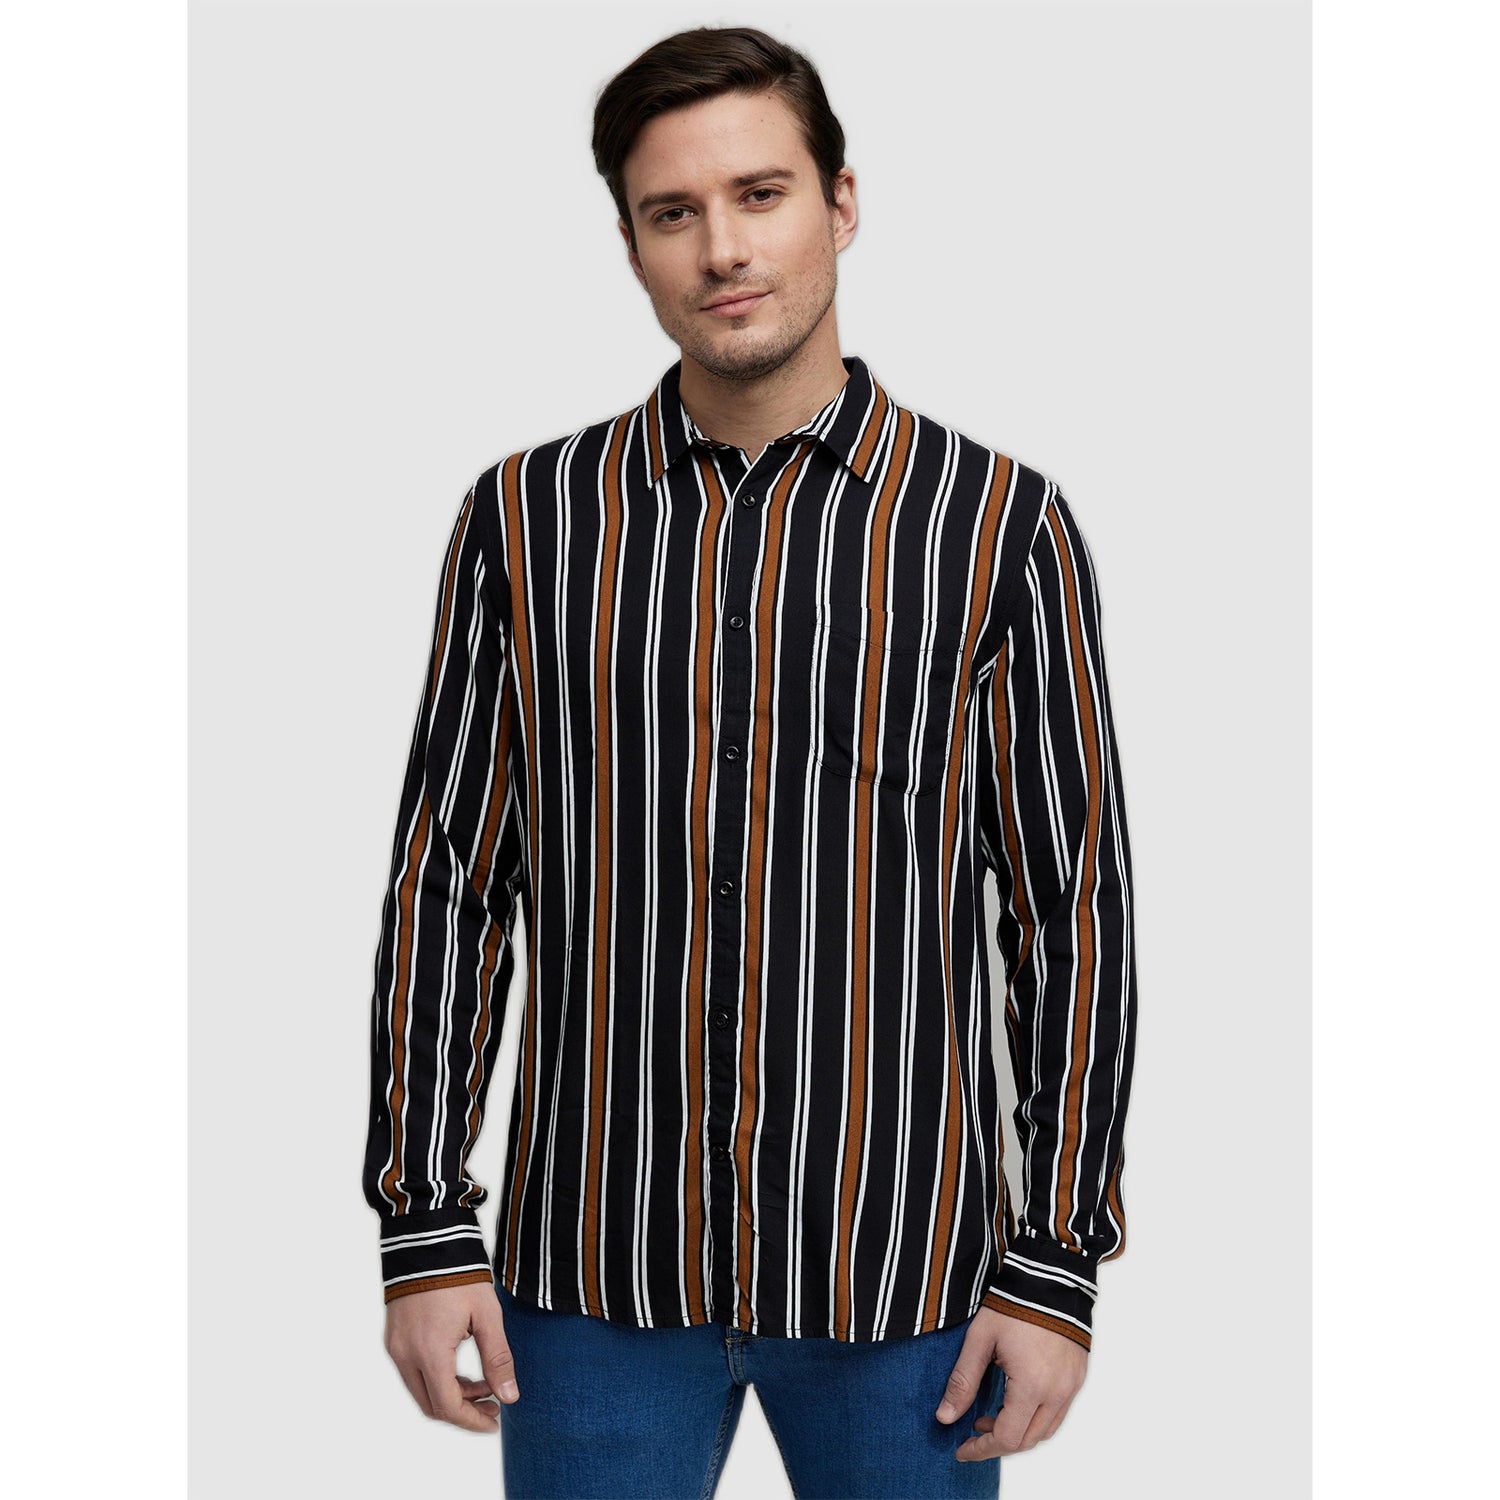 Men's Black Stripes Casual Shirts (Various Sizes)